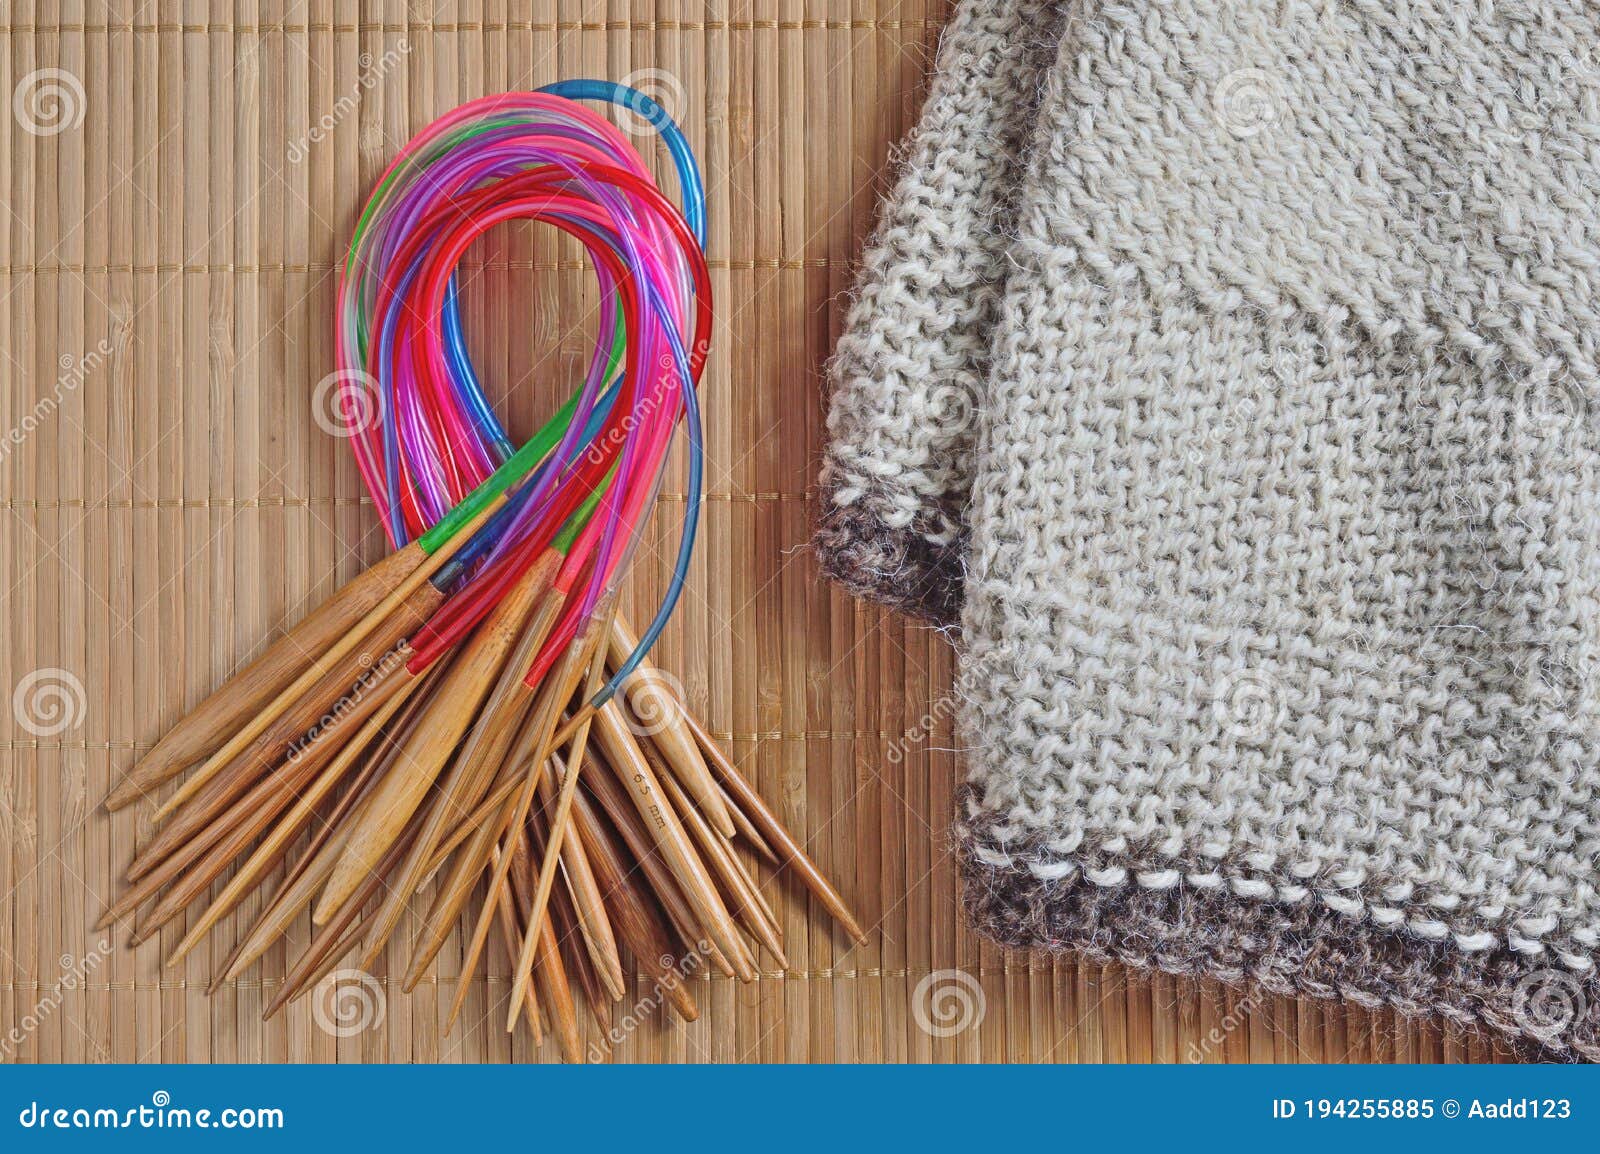 Circular knitting needles stock image. Image of knitwear